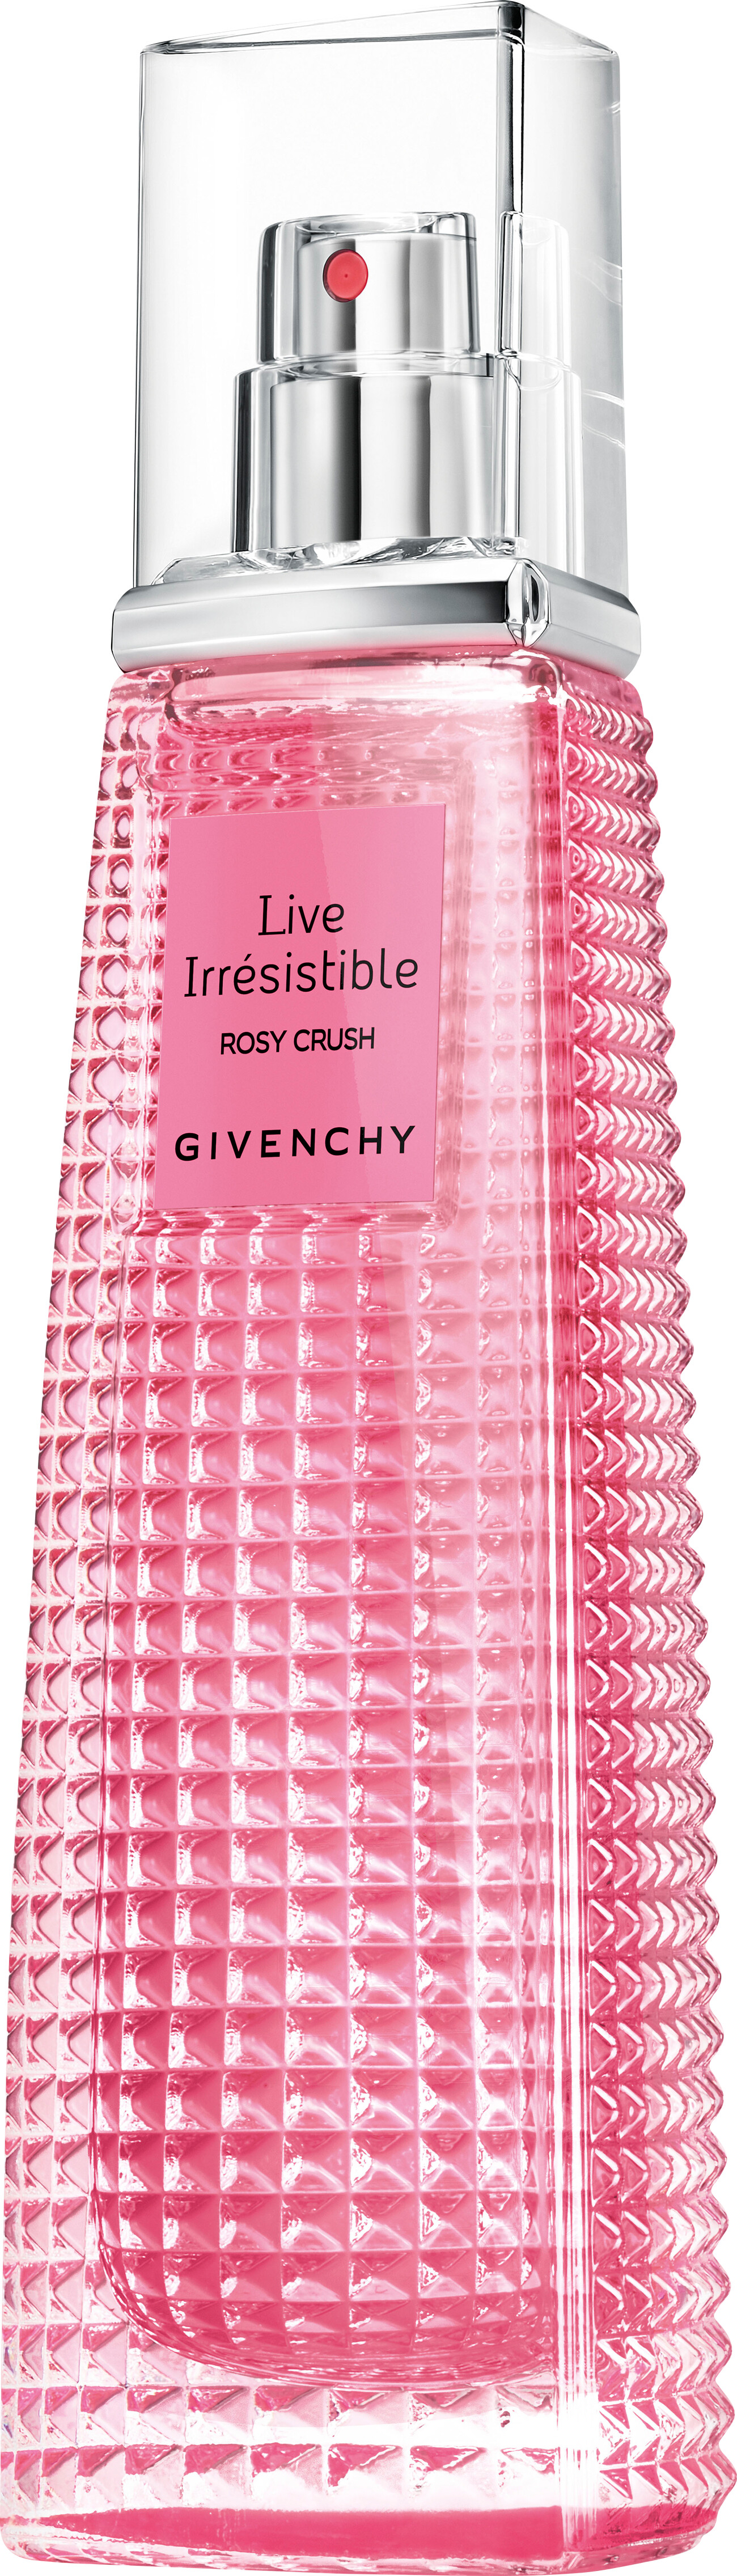 givenchy rose crush